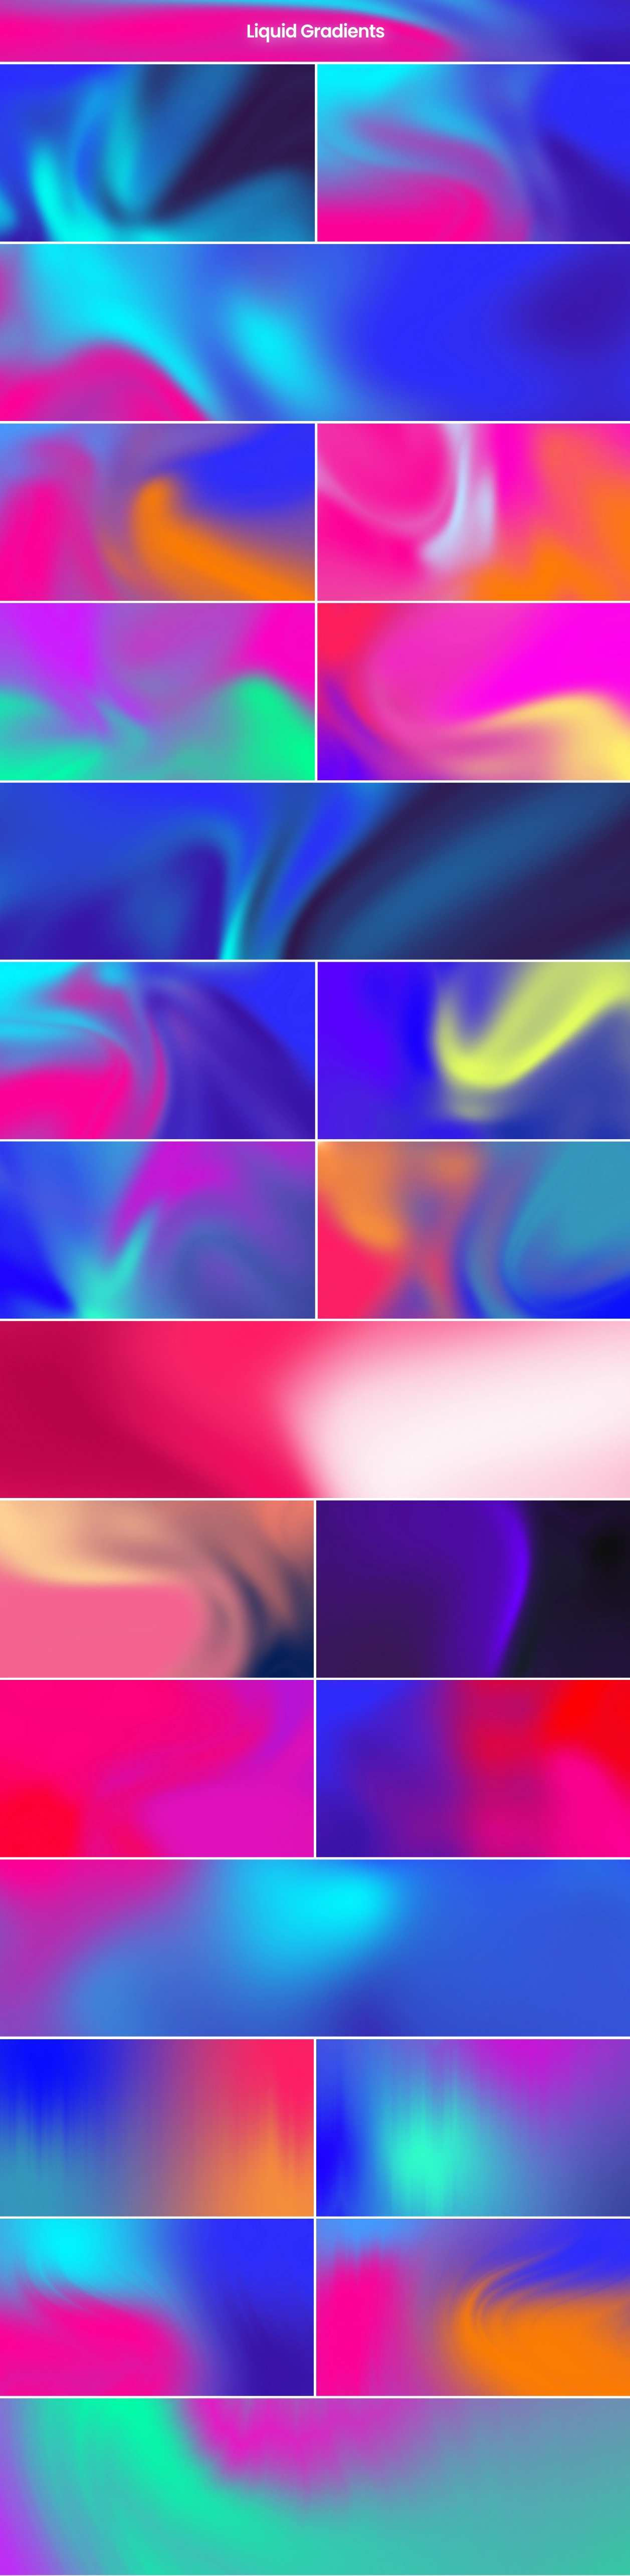 60种彩色流体渐变背景动画AE模板 Liquid Gradients OpenerAE模板、模板、素材